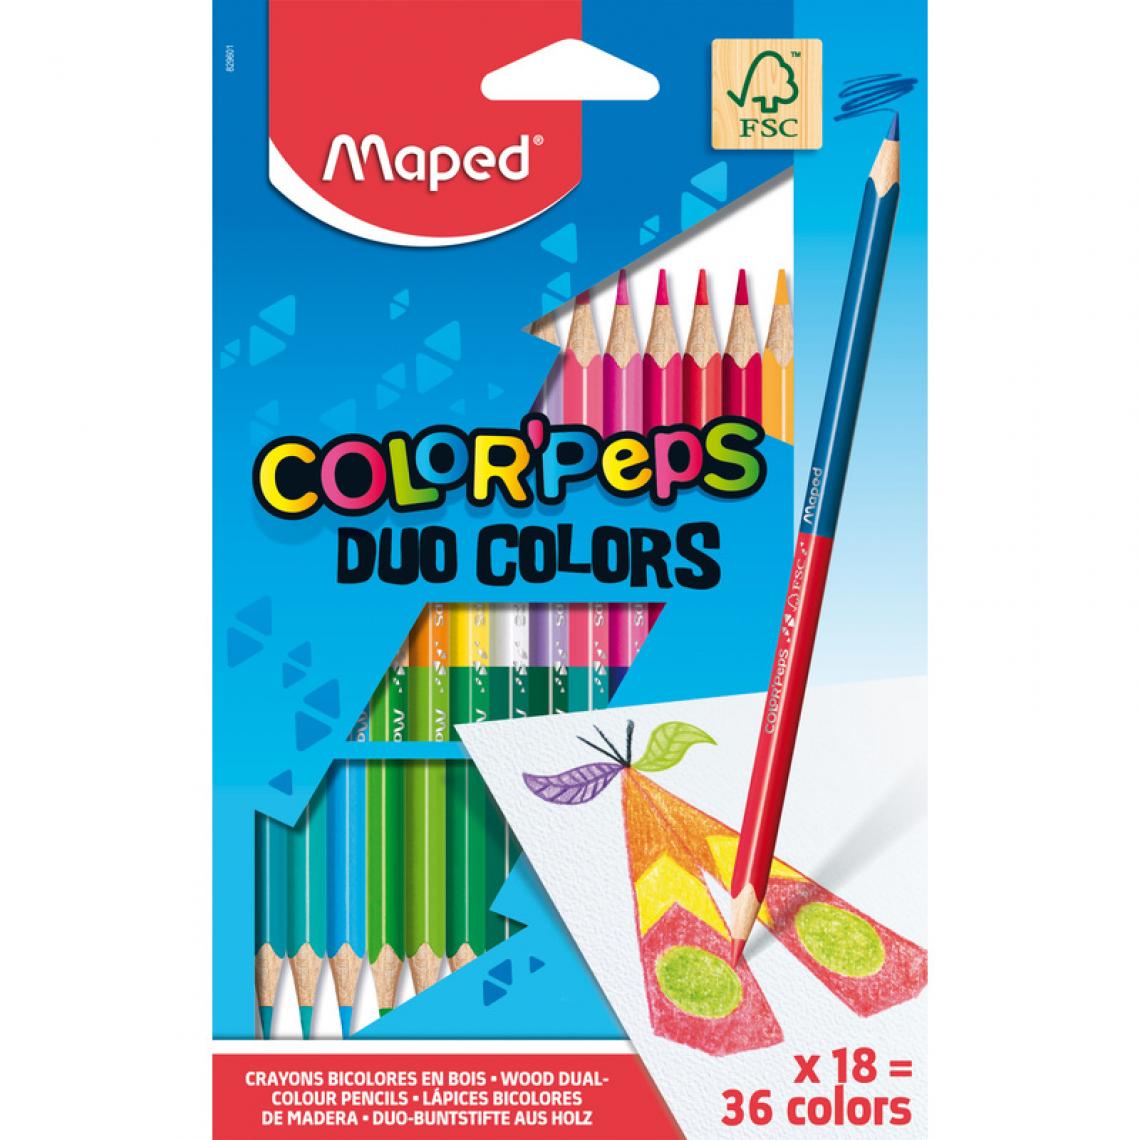 Maped - Maped Crayons bicolores COLOR'PEPS DUO, triangulaire, étui () - Bricolage et jardinage